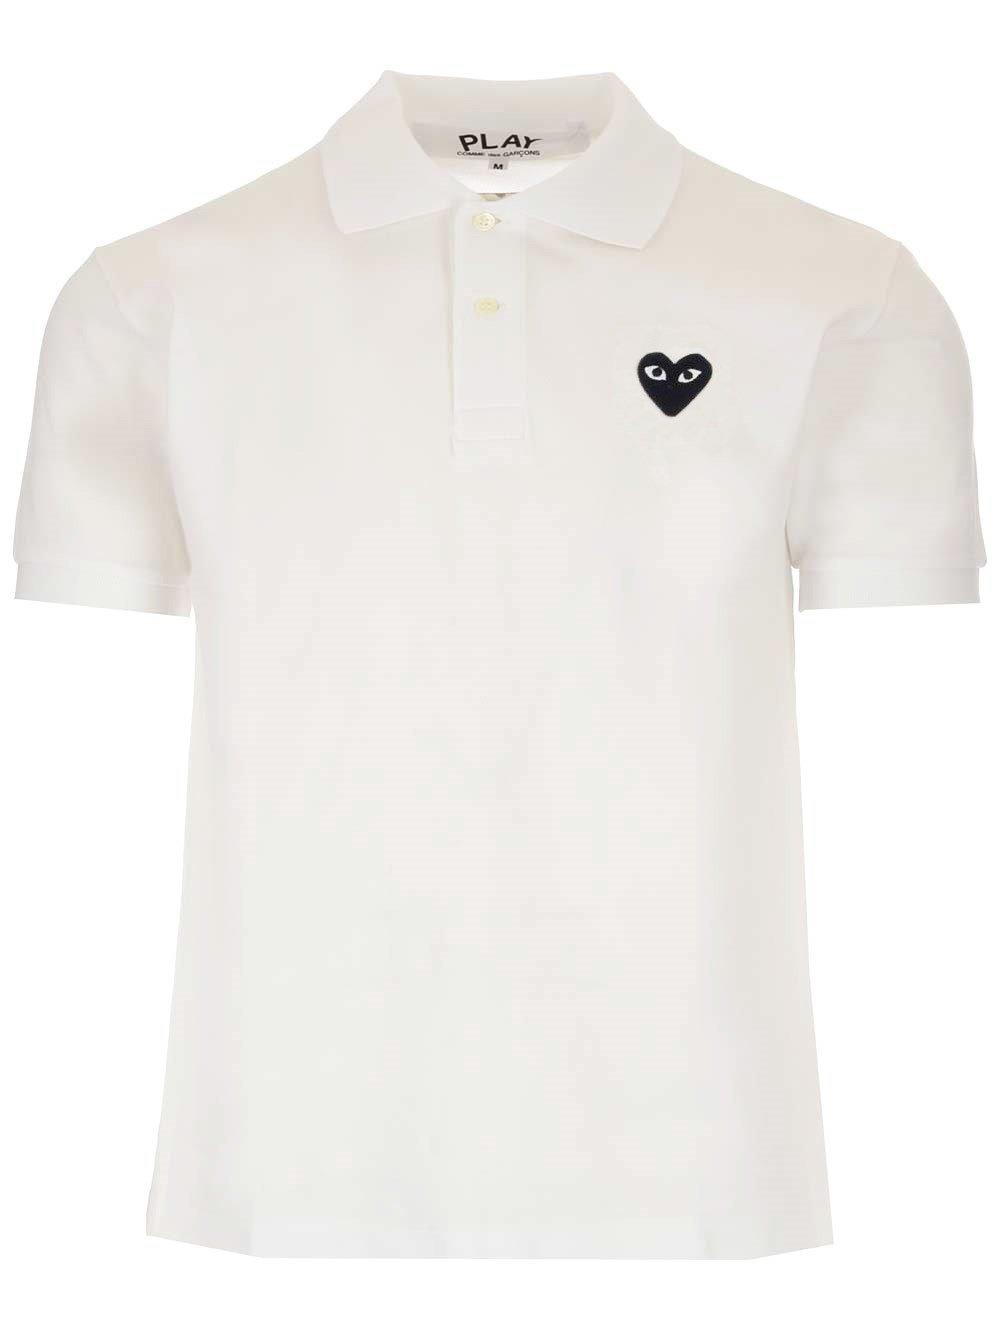 Comme des Garçons Play Heart Logo Patch Polo Shirt